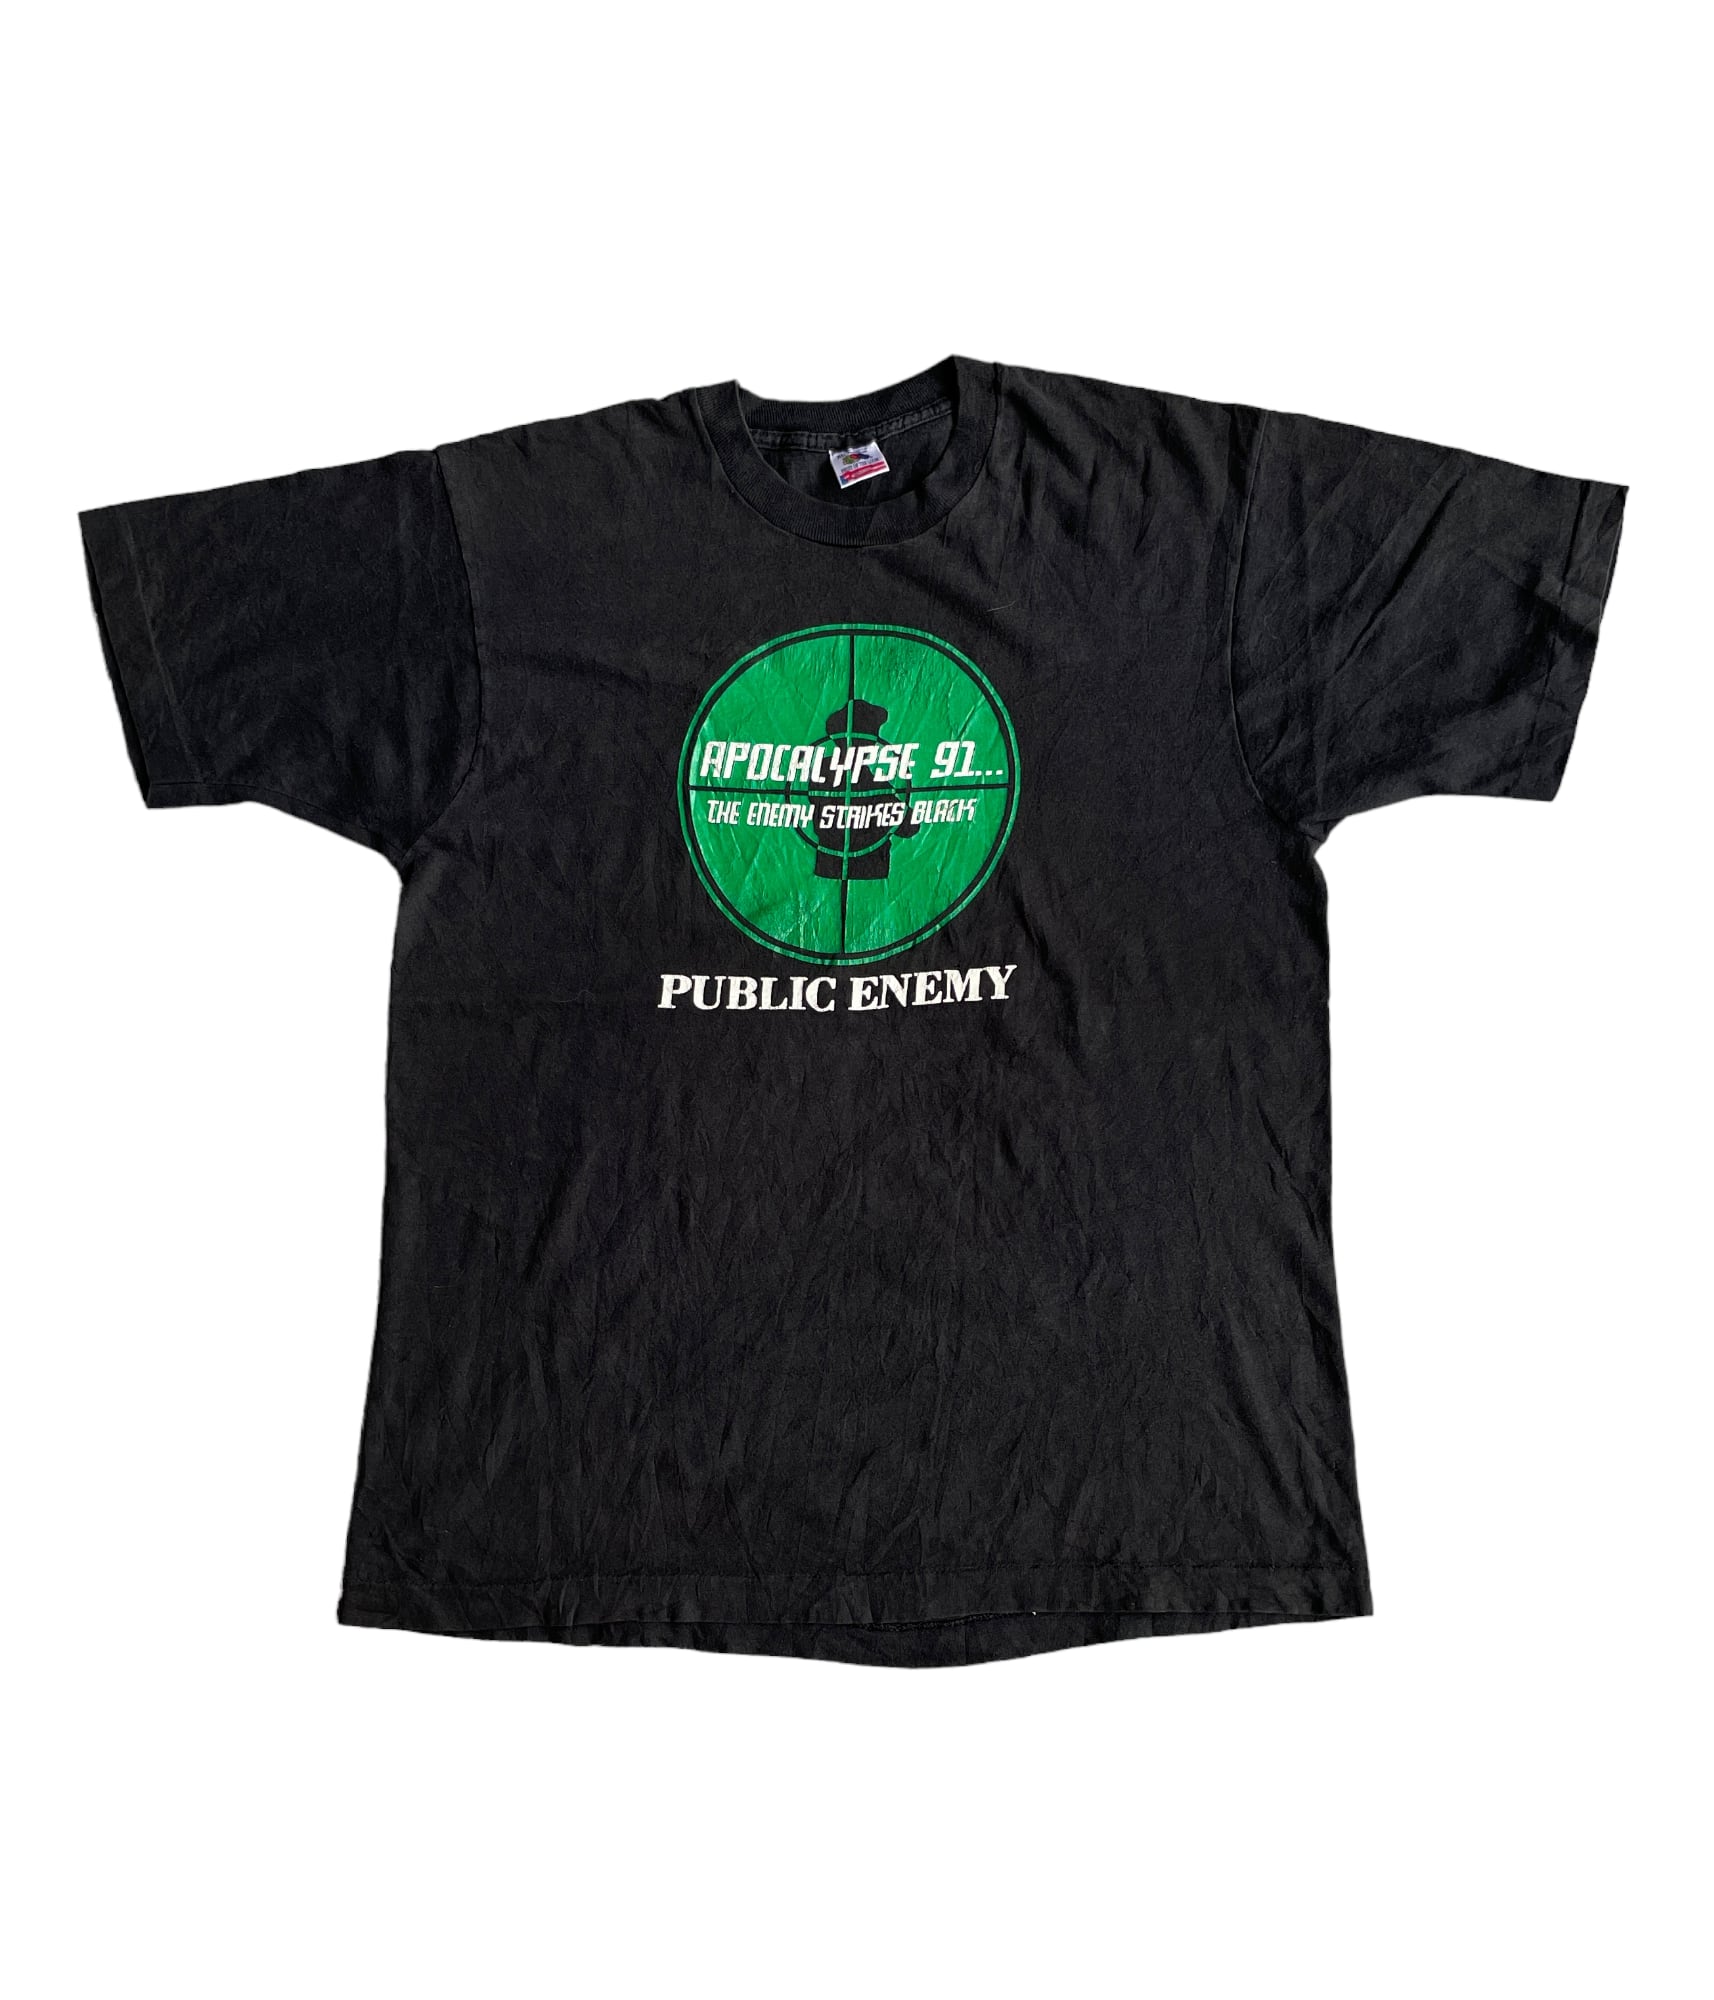 90's public enemy apocaclypse tシャツ